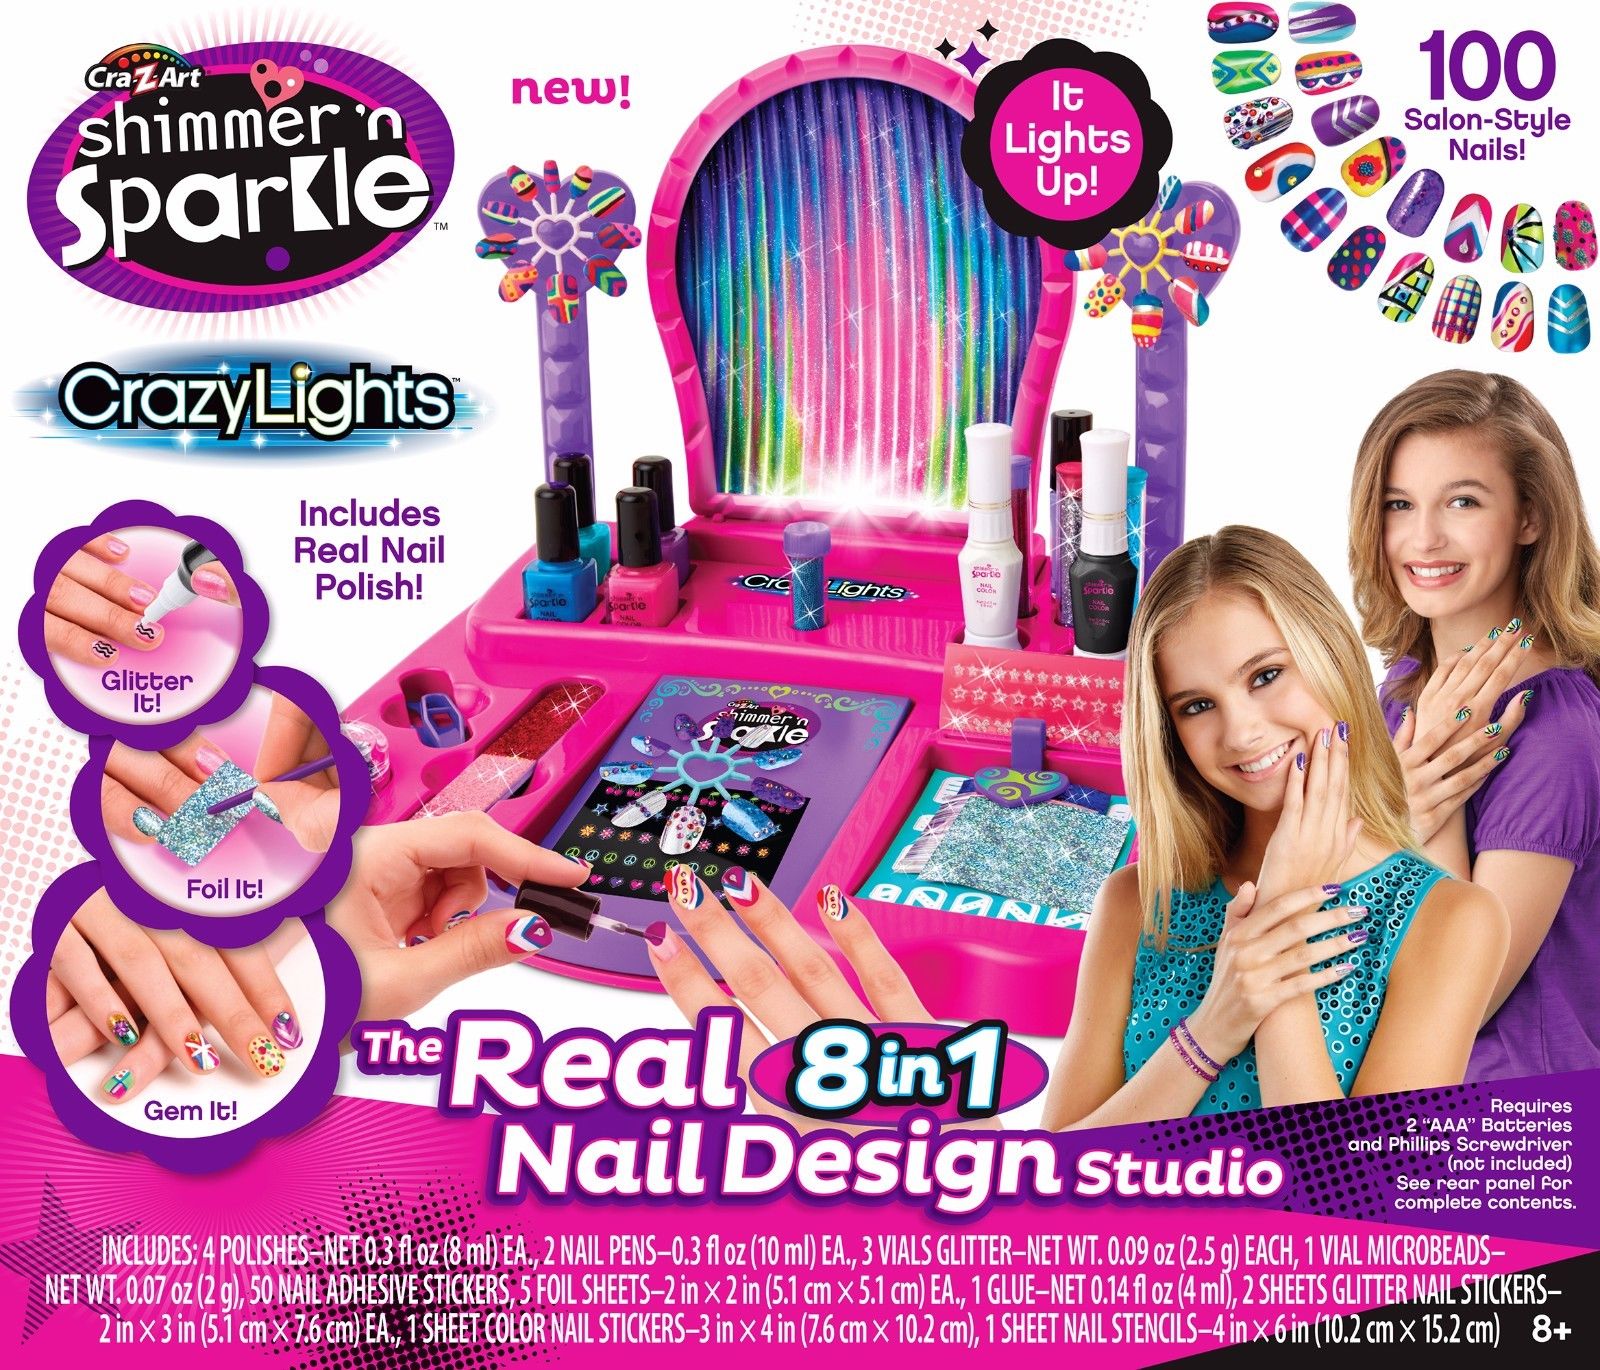 CraZArt Shimmer and Sparkle Crazy Lights Super Nail Salon Kit Top Toys